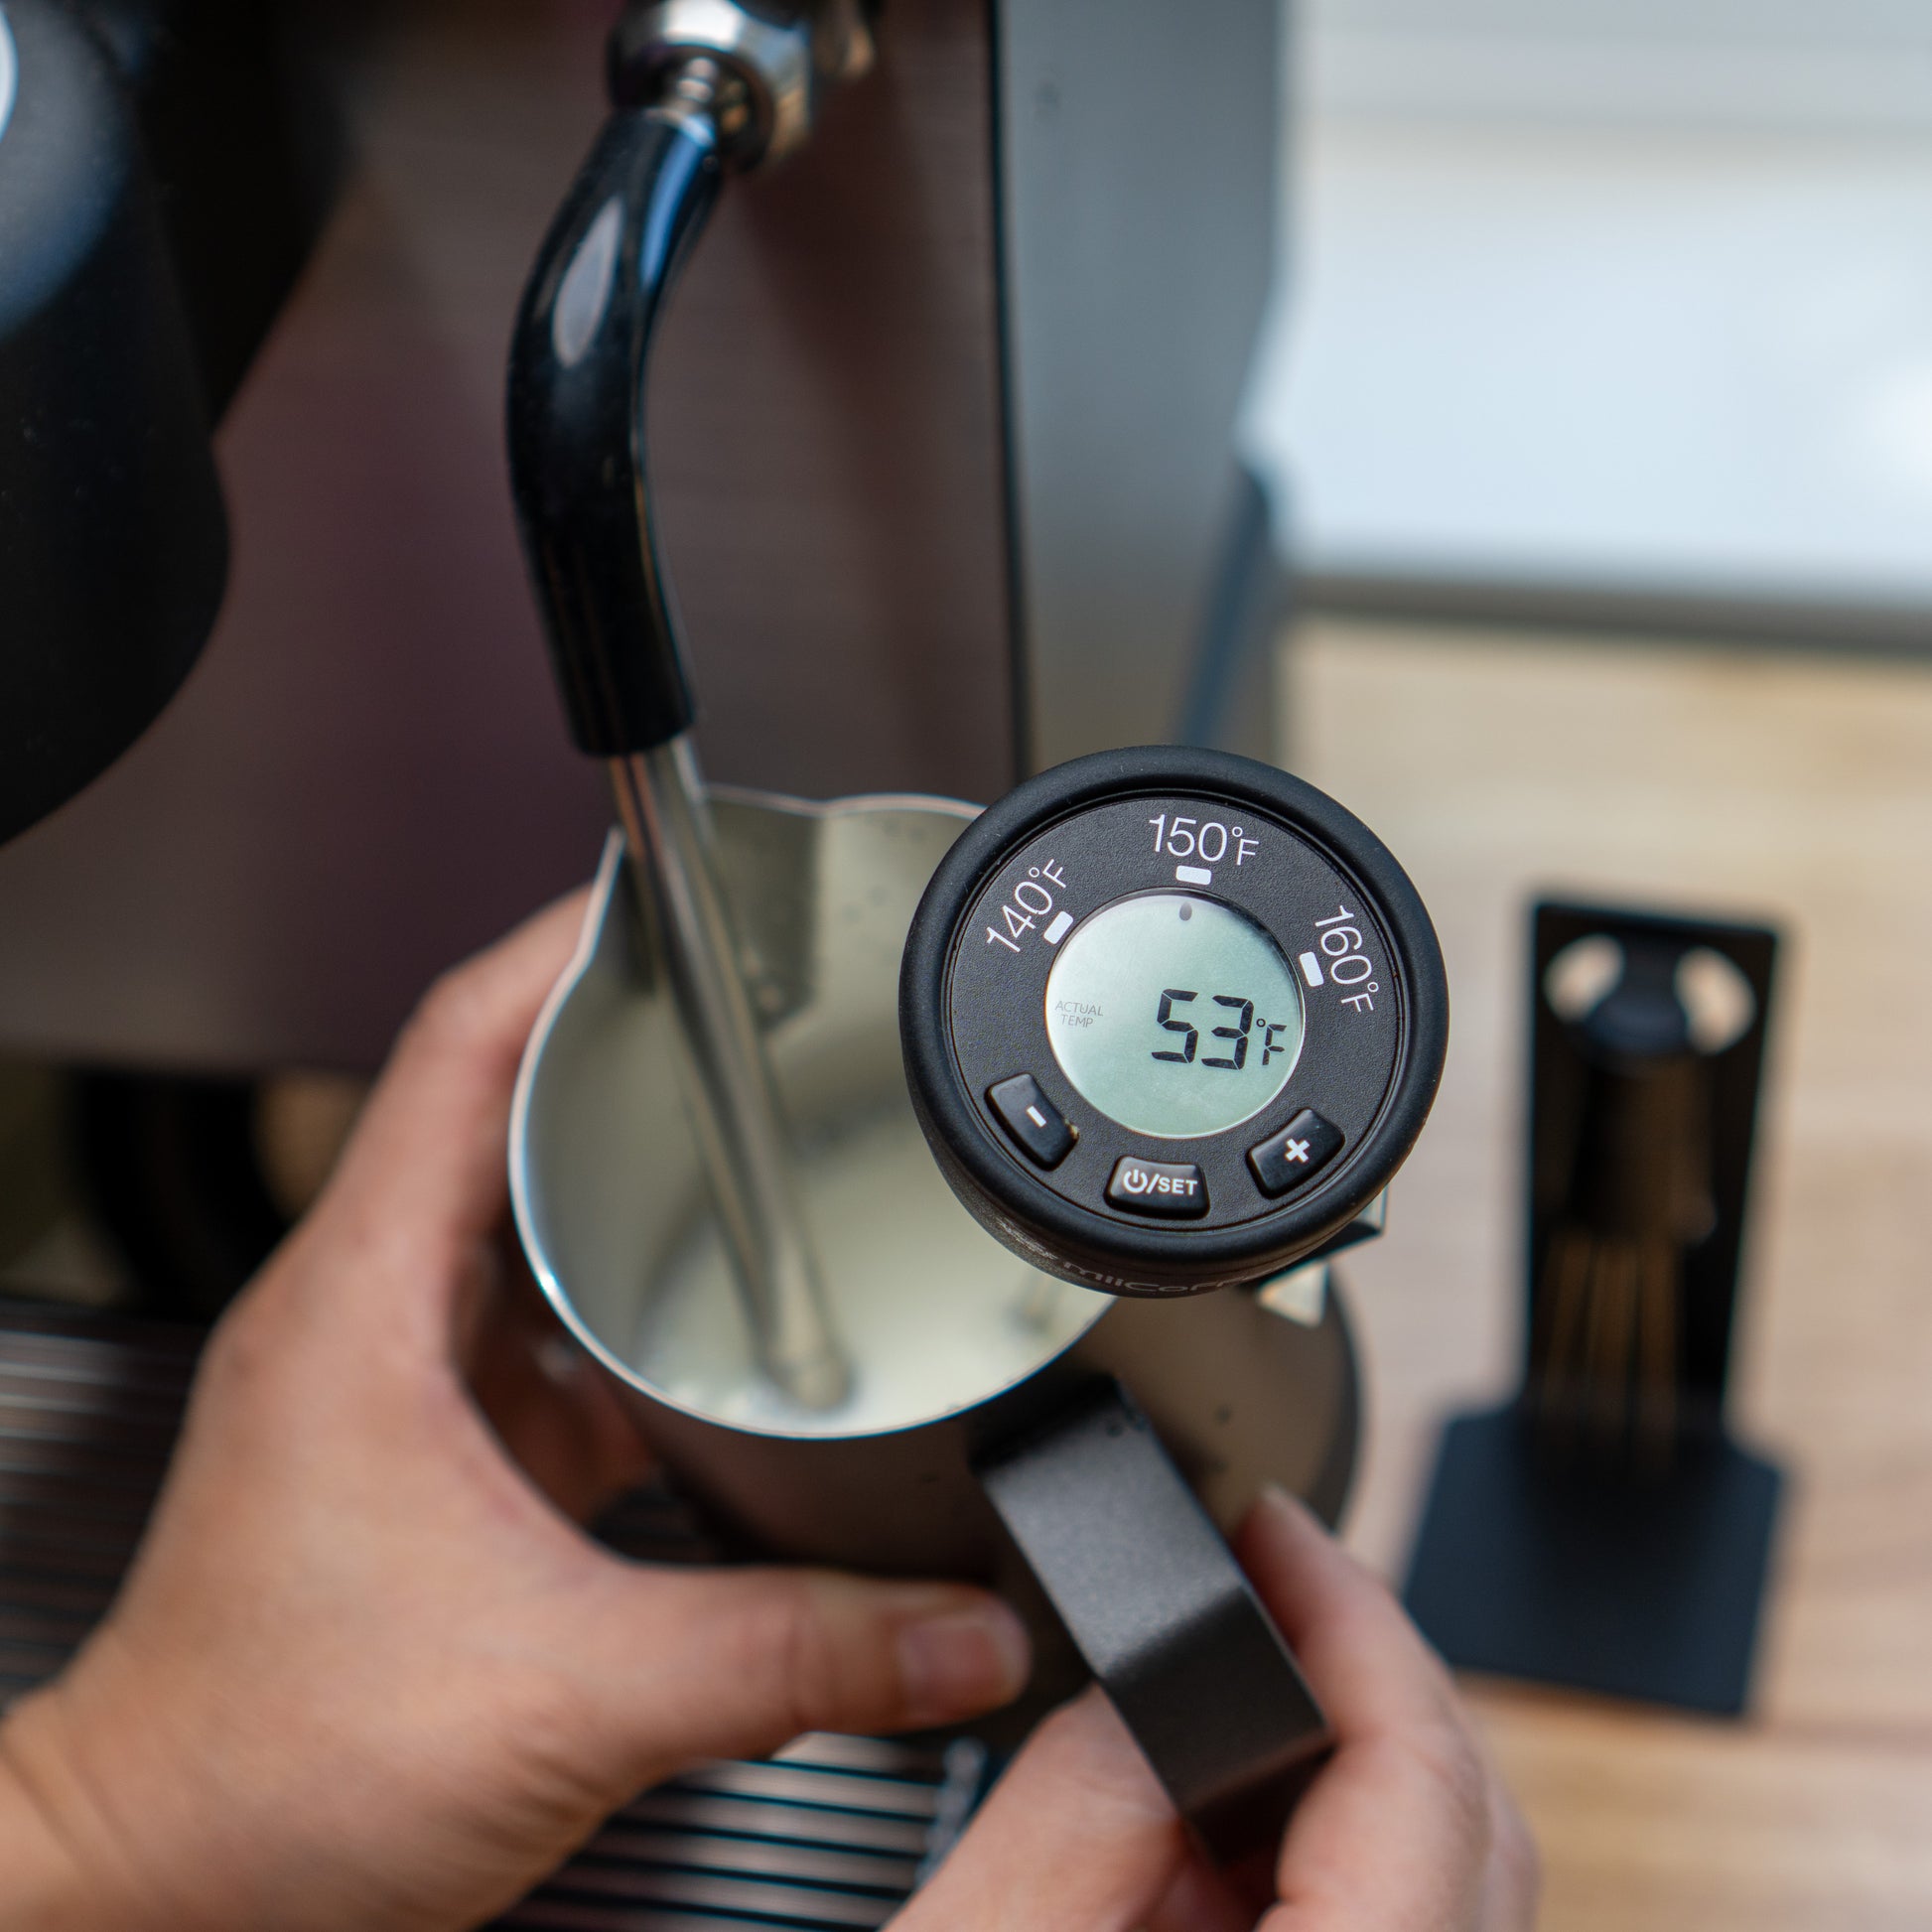 Milk Frothing Espresso Thermometer - CDN Insta Read